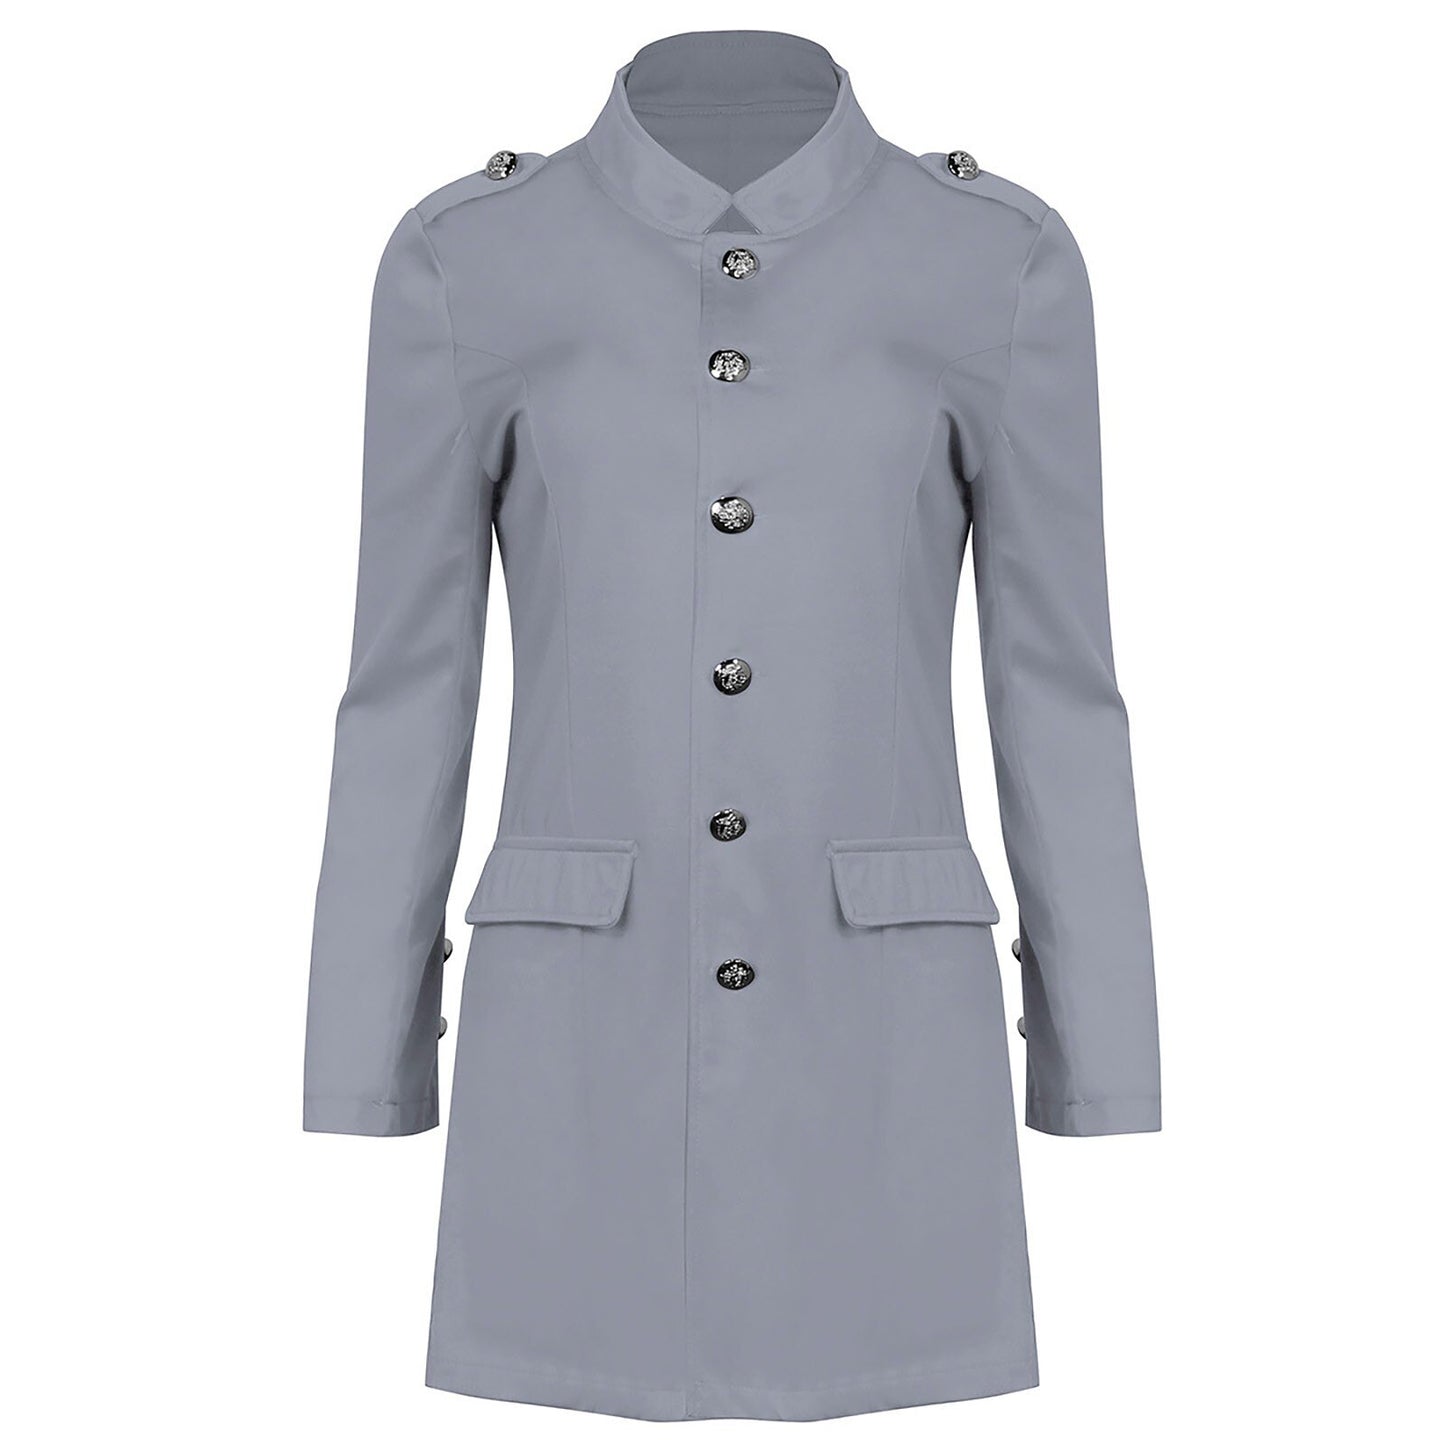 New Fashion Office Lady Lapel Jackets Personality Design Suit Coat Long-sleeve Jackets Button Coat Jaqueta Feminina 2021